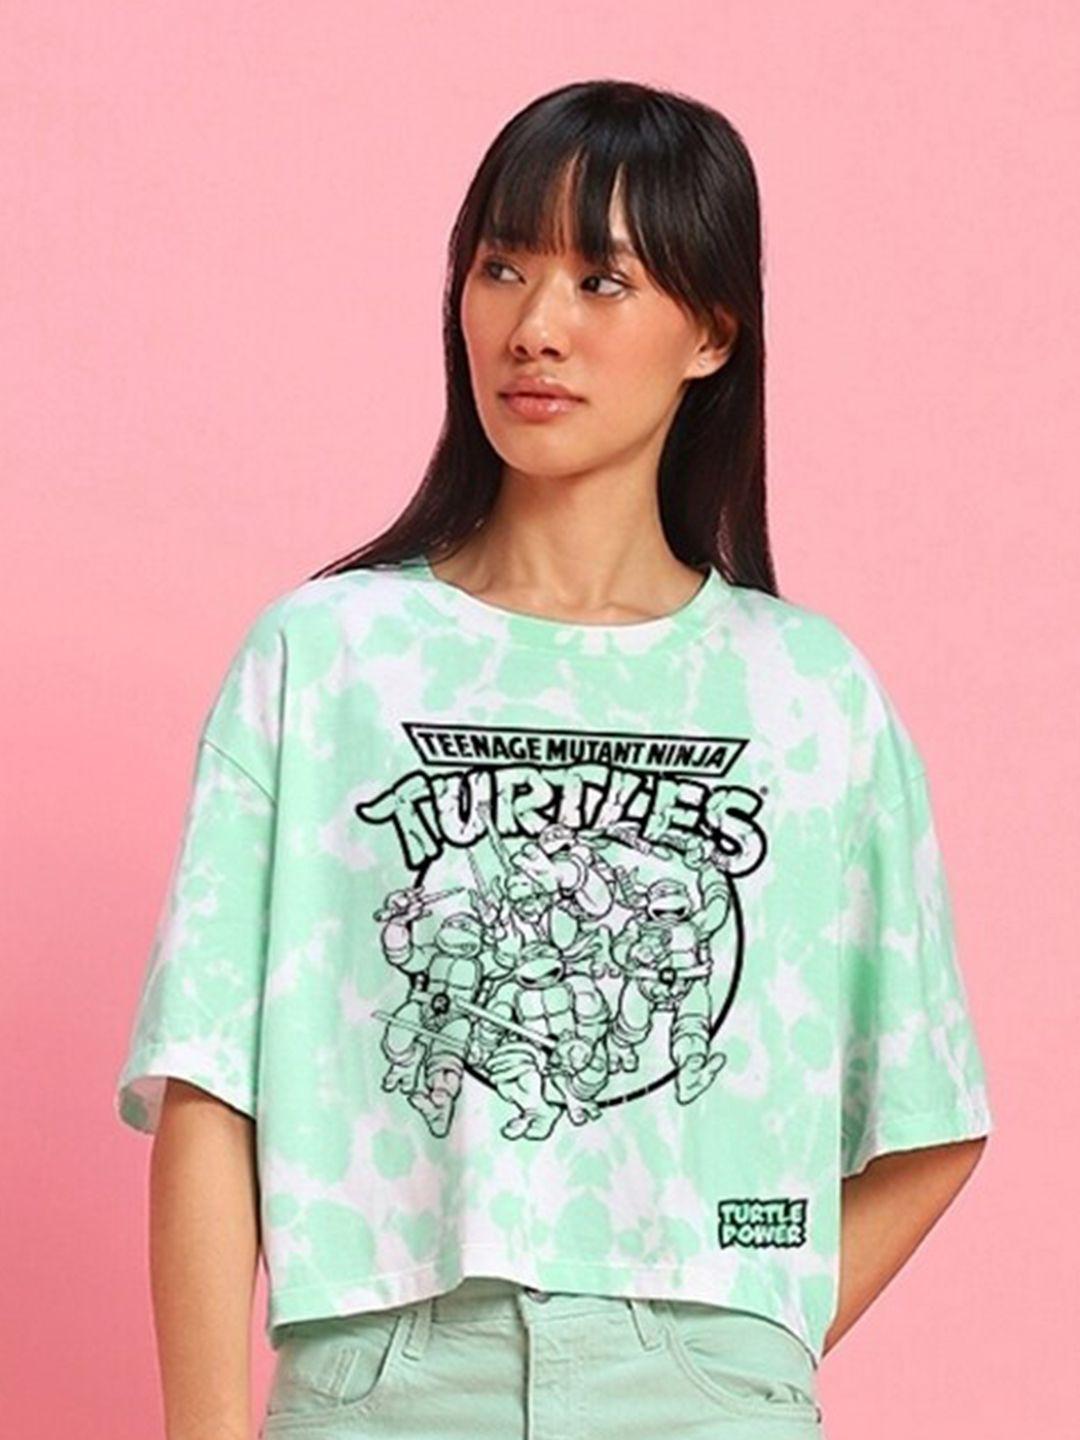 bewakoof teenage mutant ninja turtles print cotton top